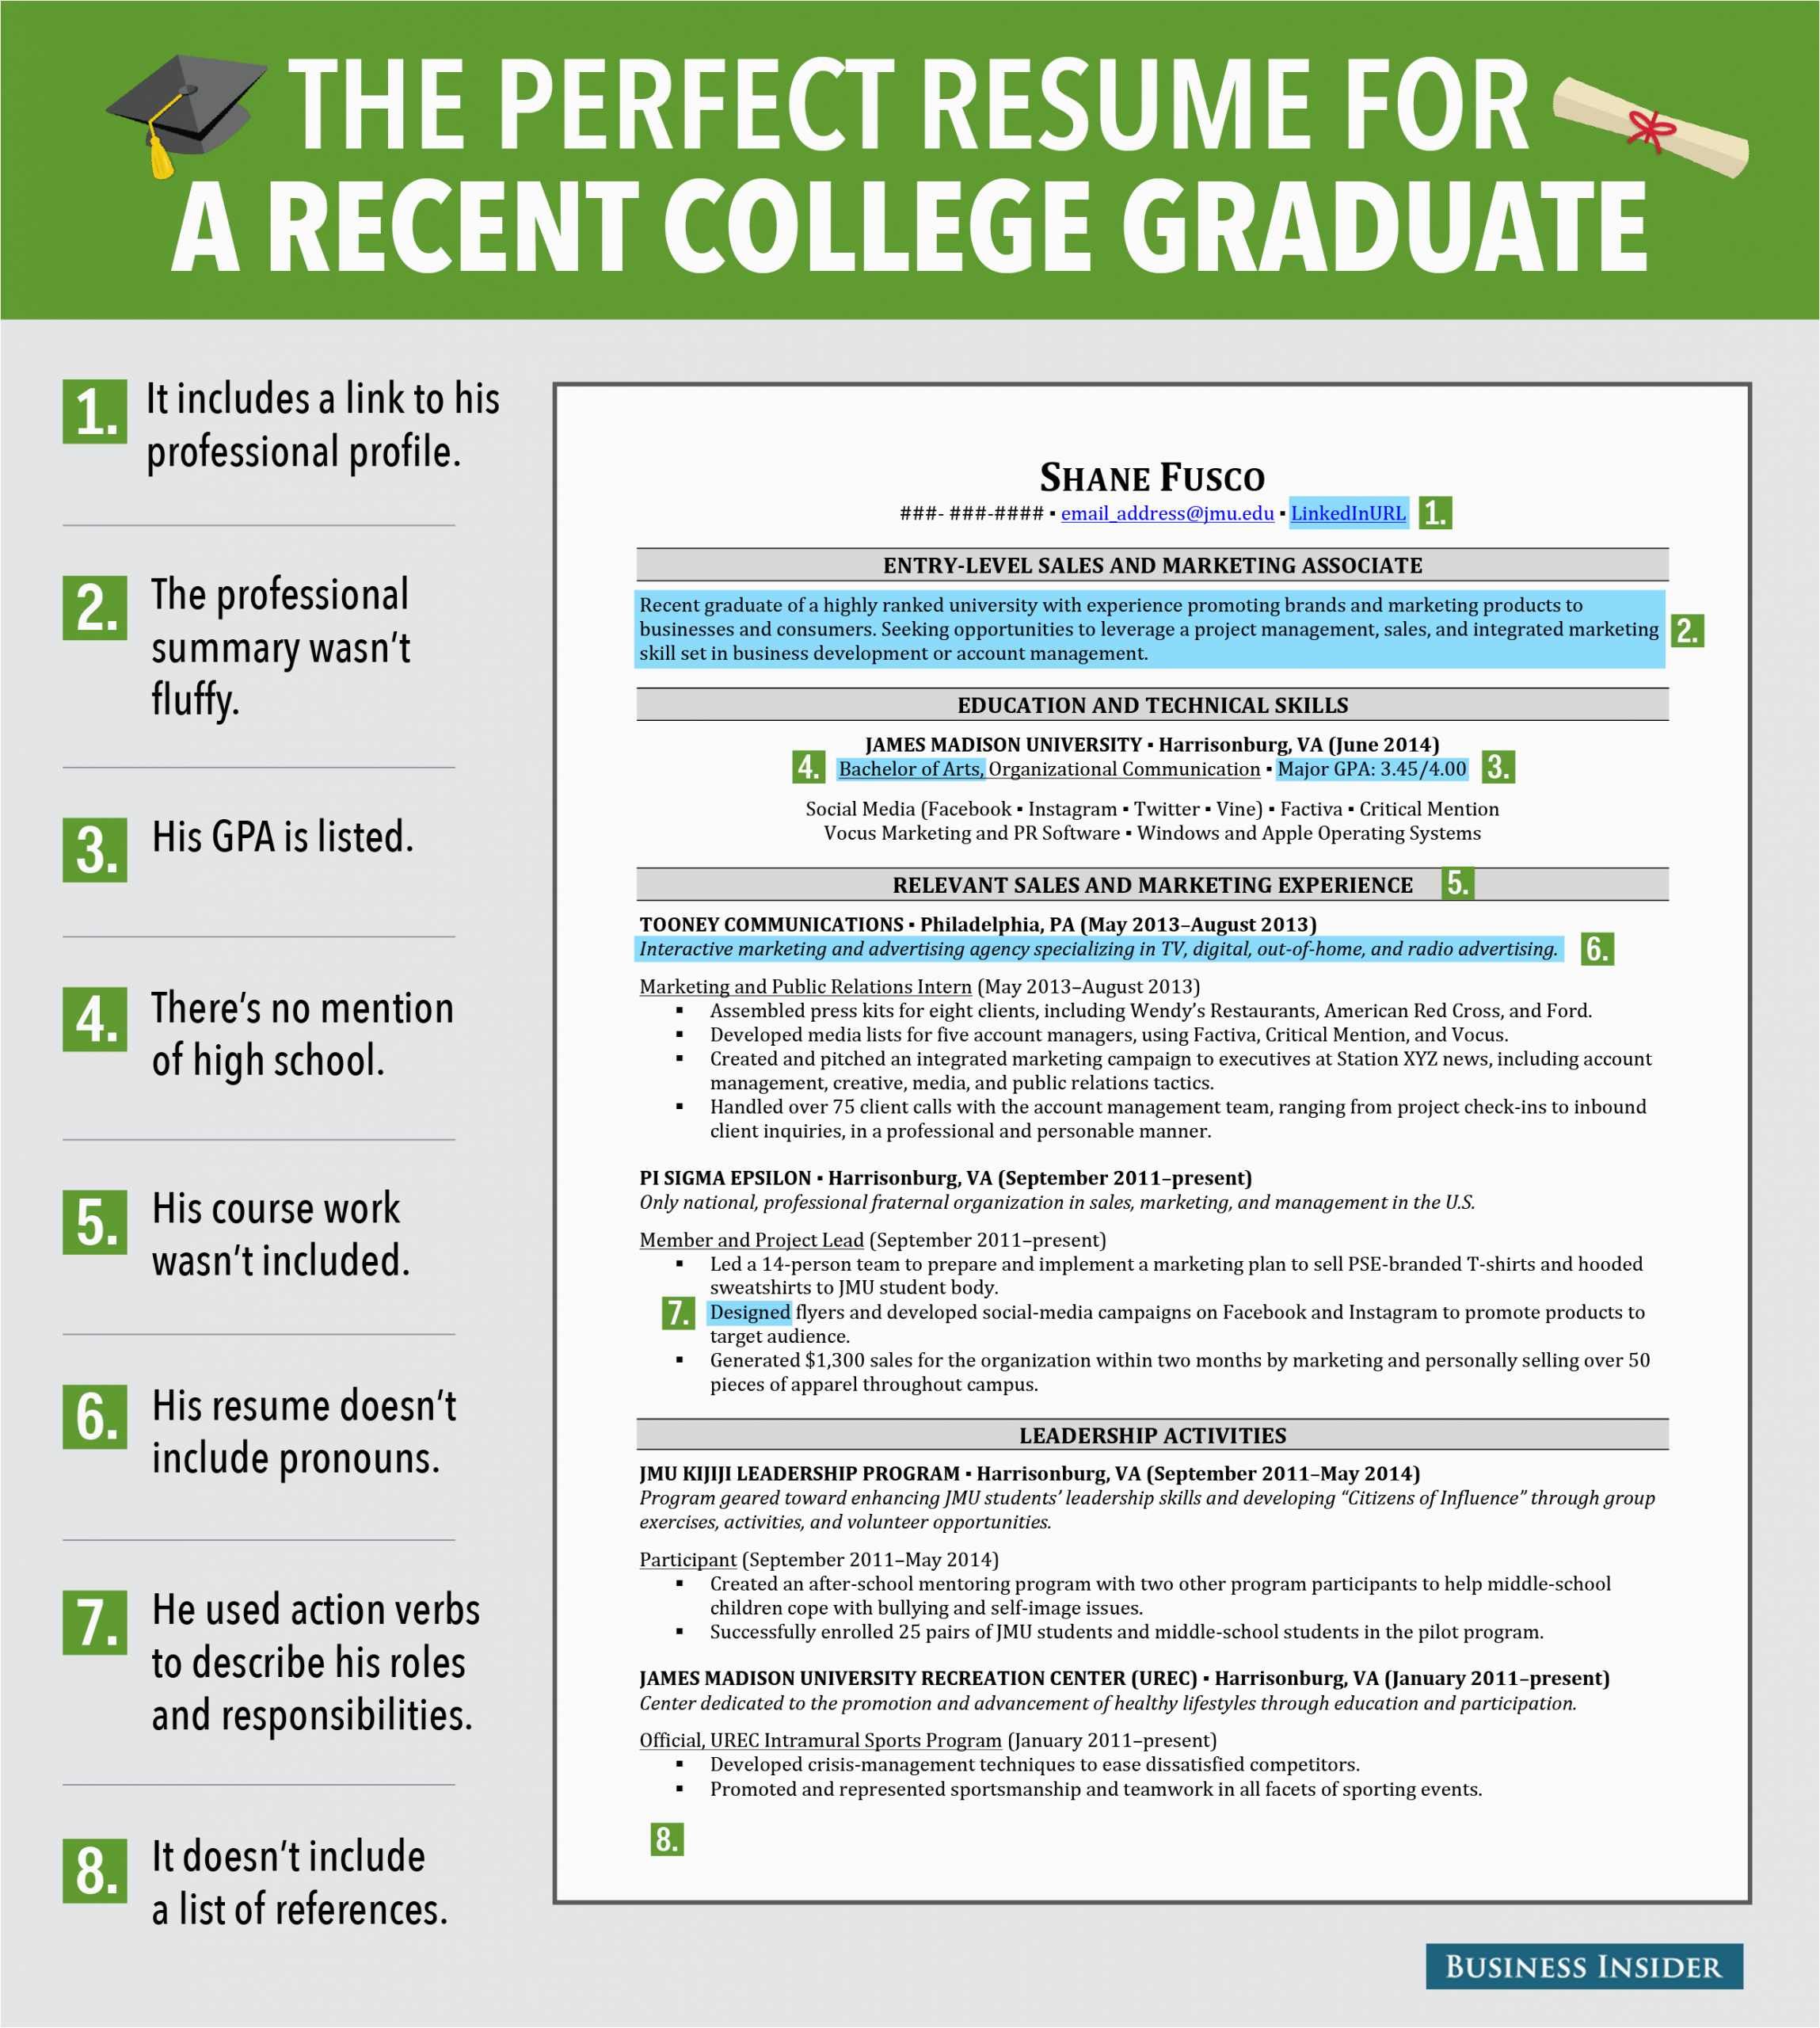 Best Resume Template for Recent College Graduate Excellent Resume for Recent Grad Business Insider